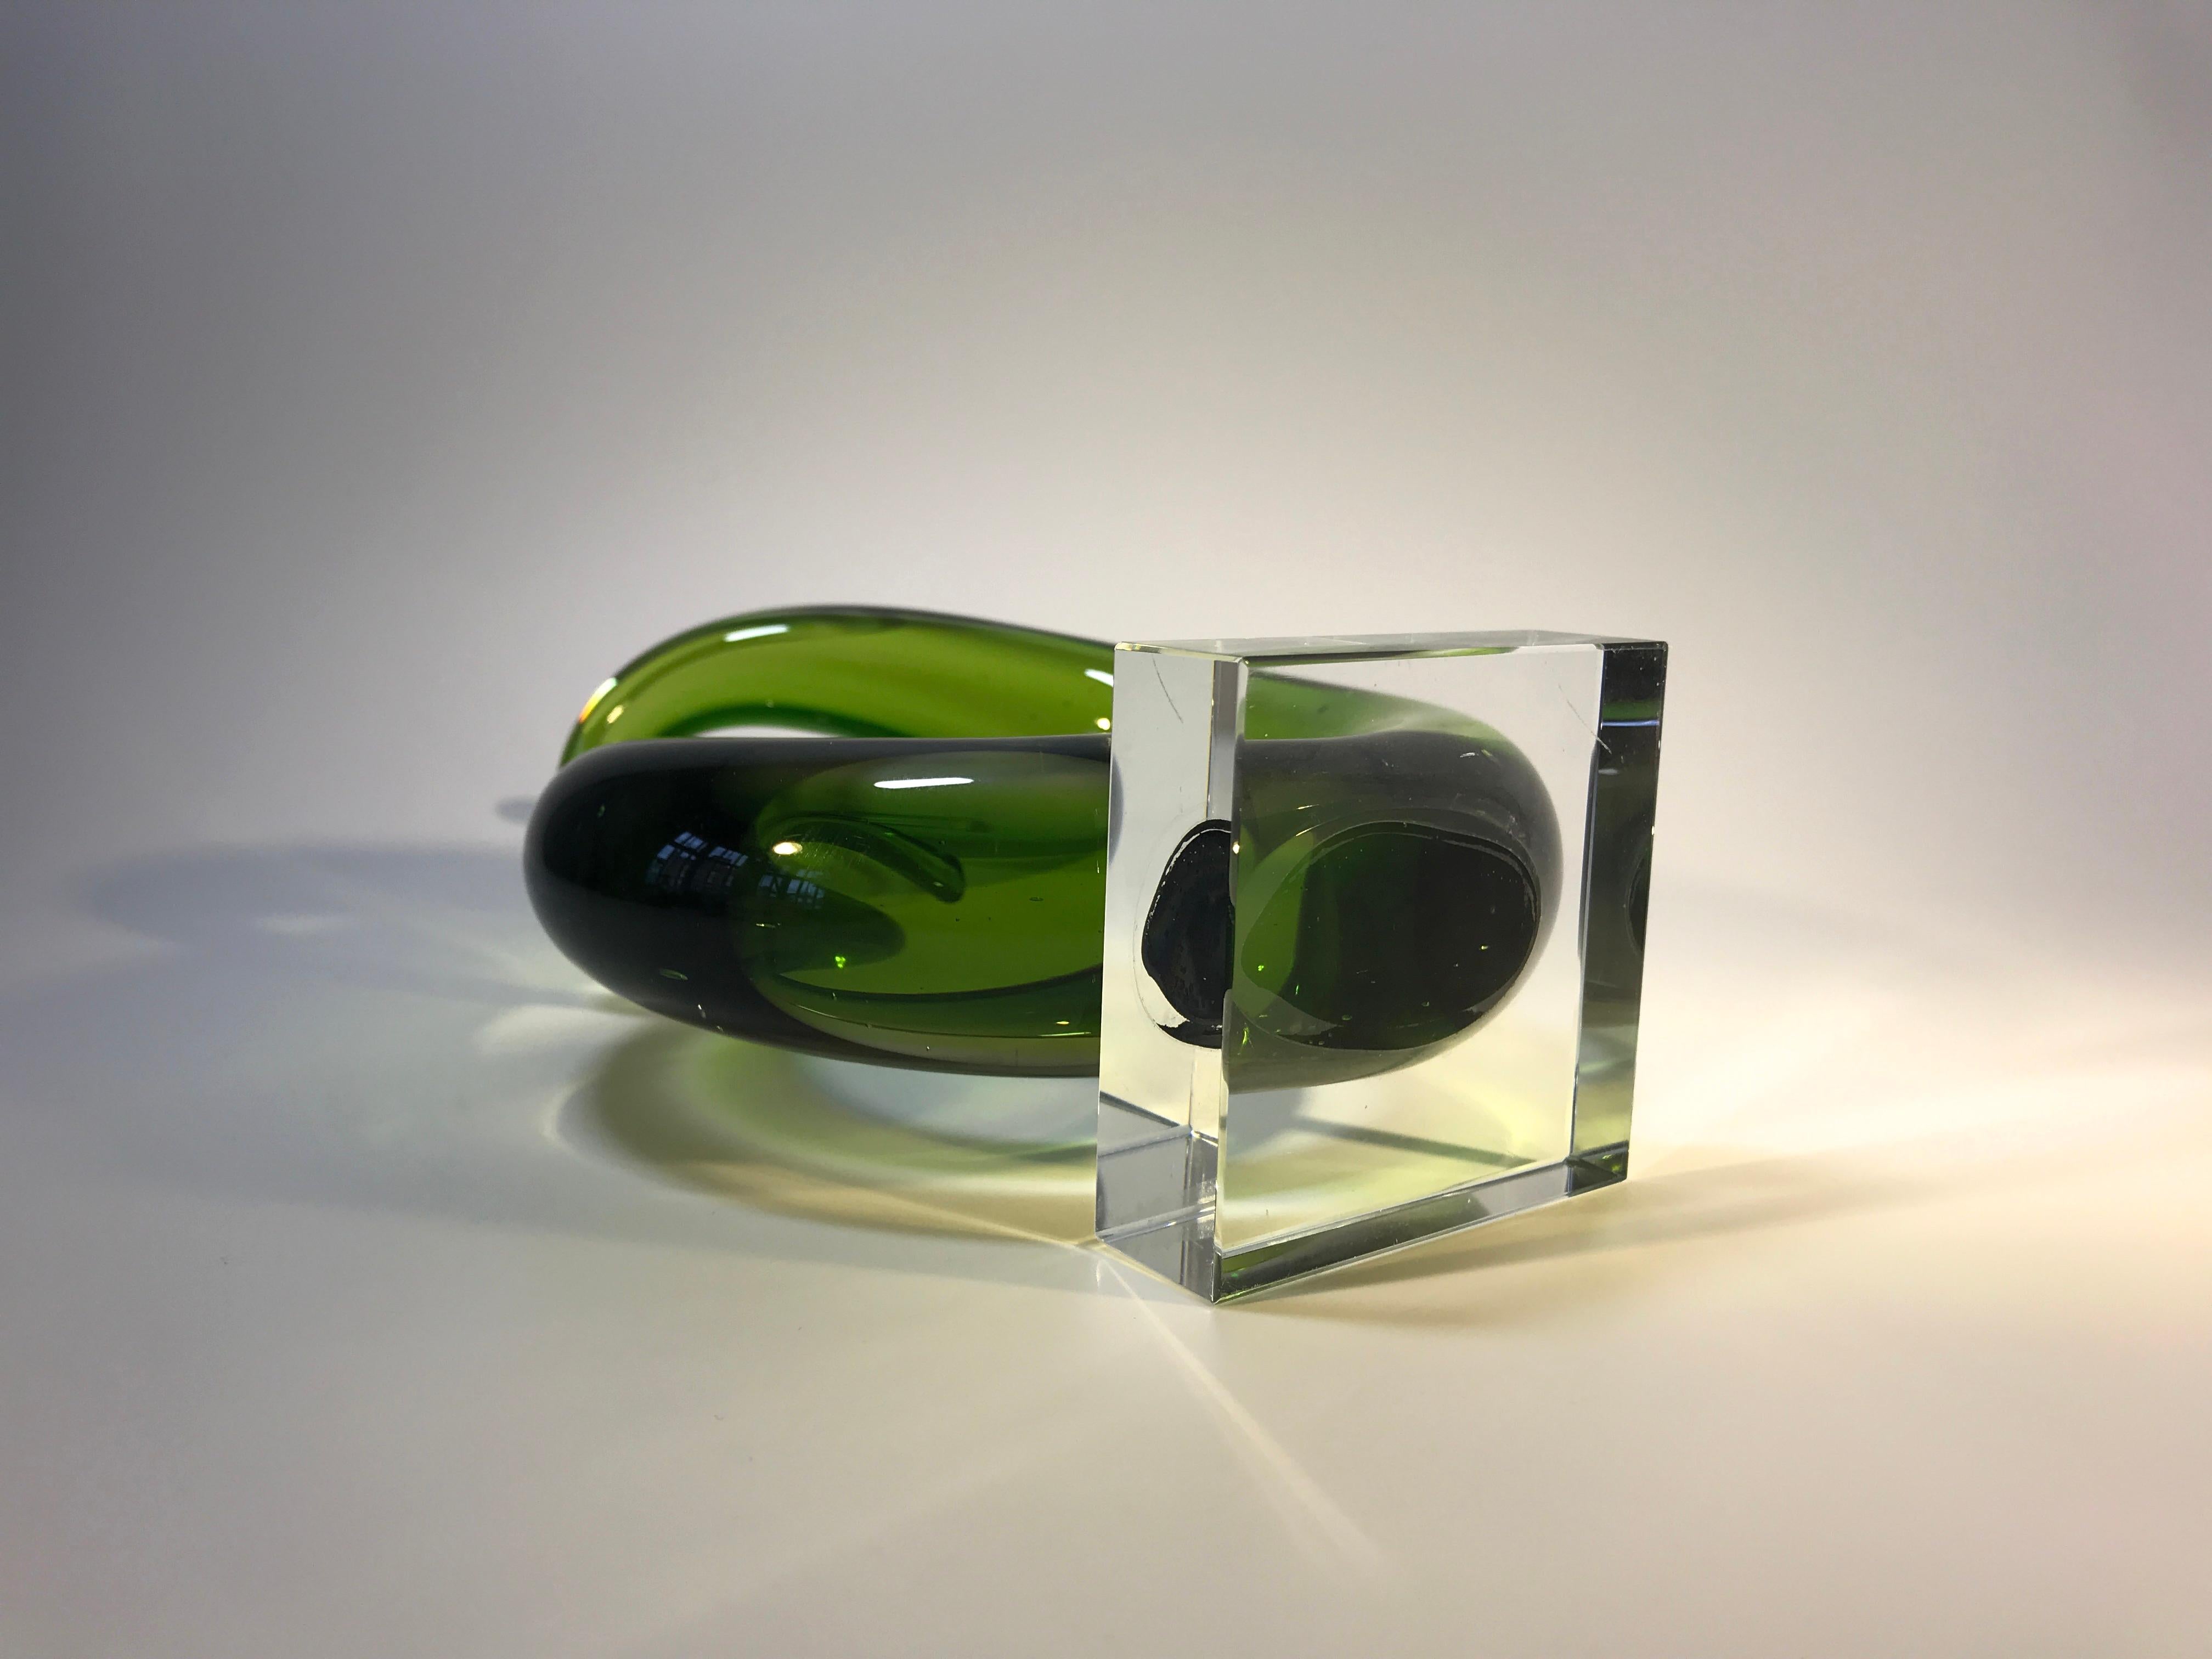 murano glass sculpture